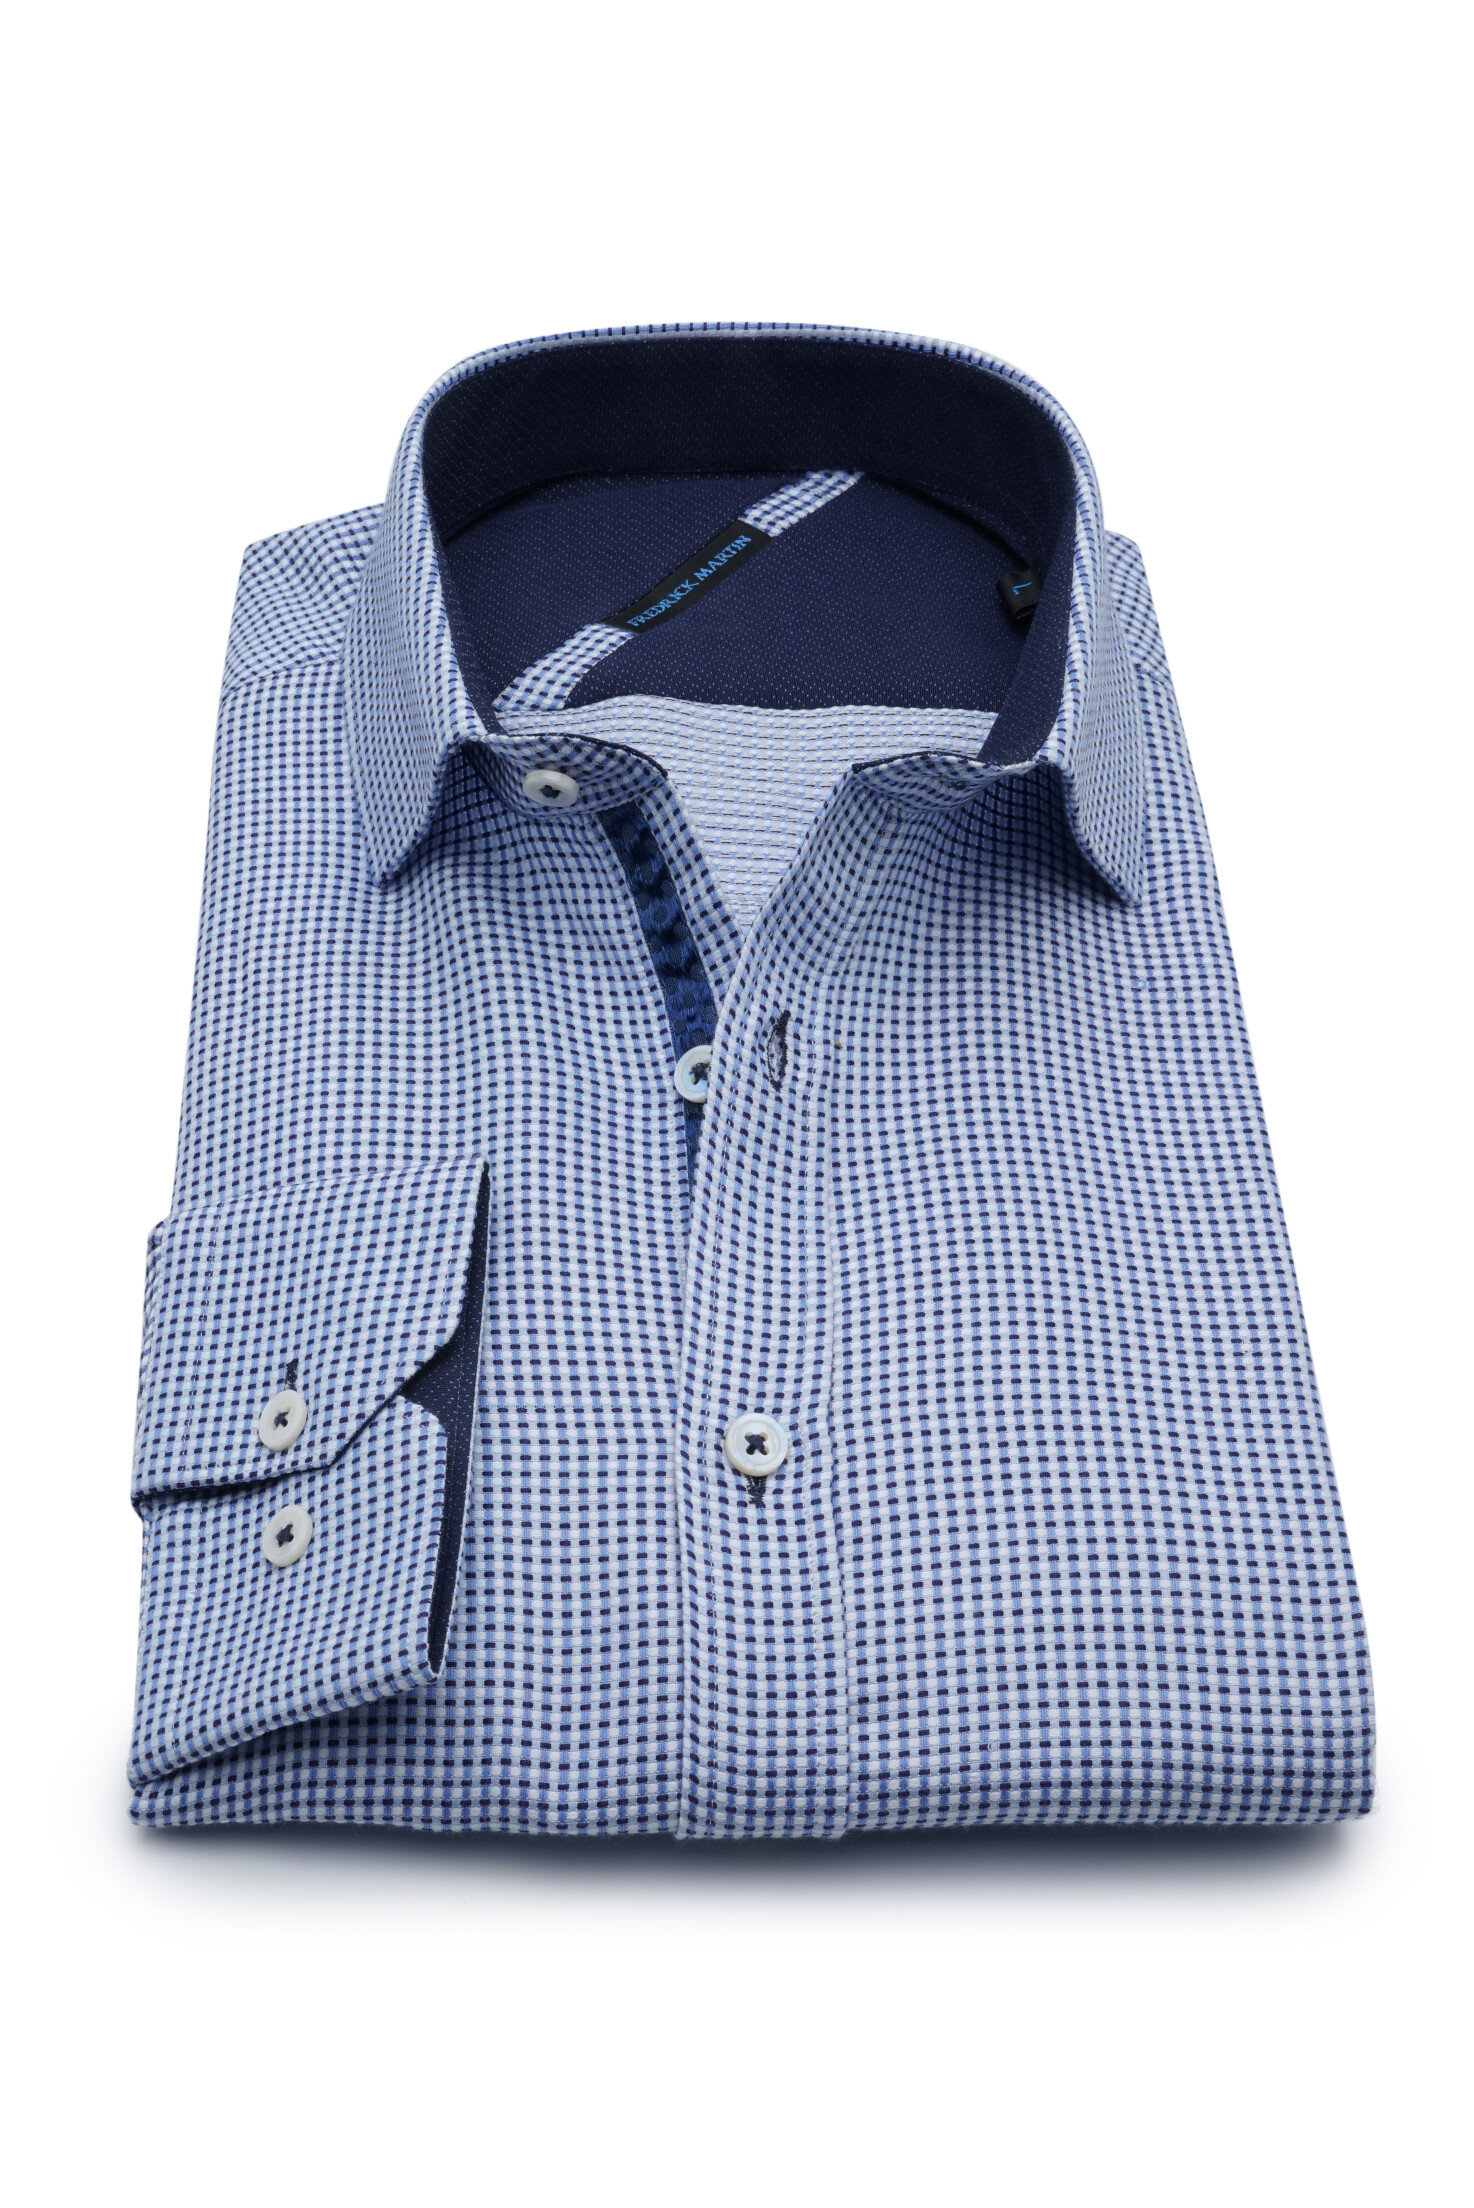 276 YARN005 | Dress Shirt Companies (100% Cotton) - Bulk Long Sleeve Shirts